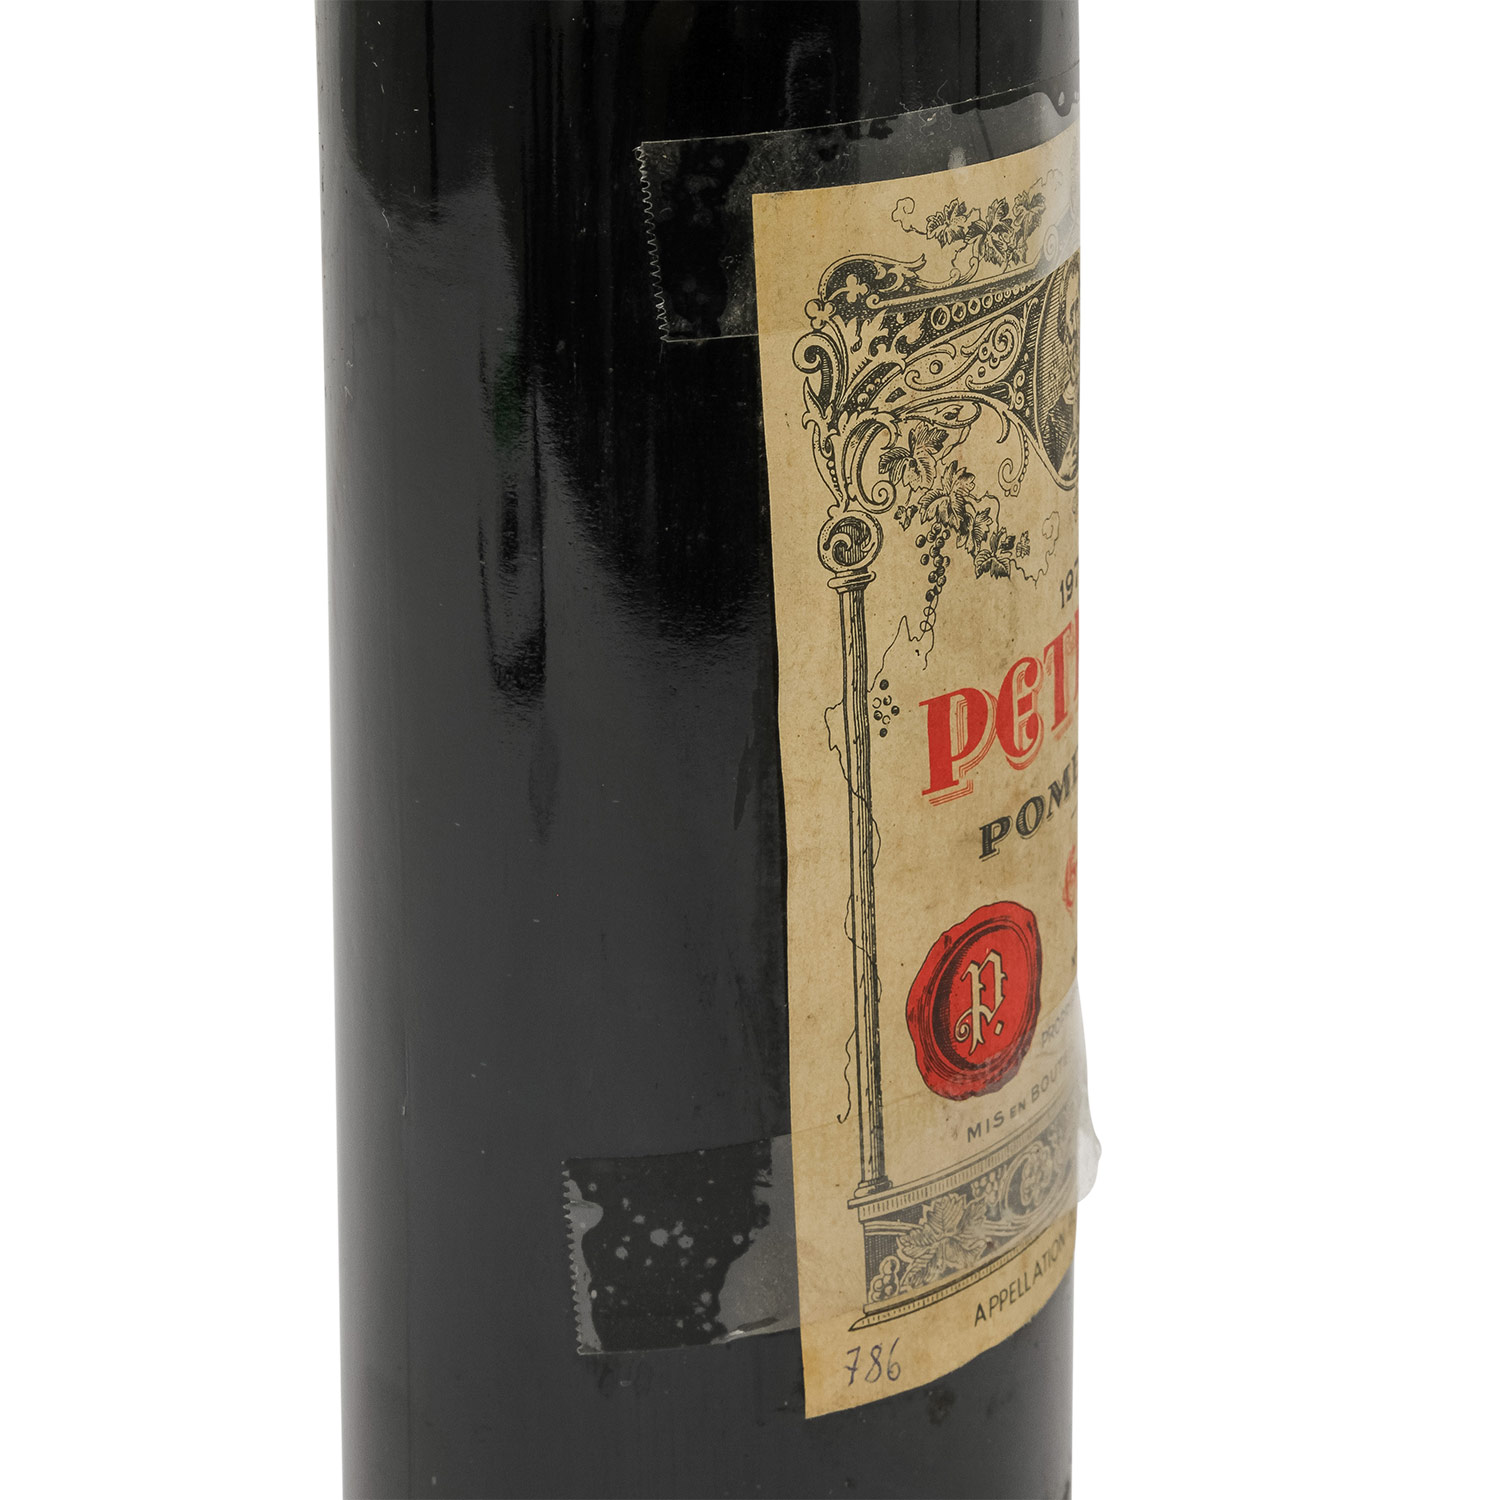 PETRUS, Pomerol, 1970Bordeaux, Frankreich, Rebsorte: Merlot, 13-15% Vol., 750 ml, Füllstand in der - Image 6 of 8